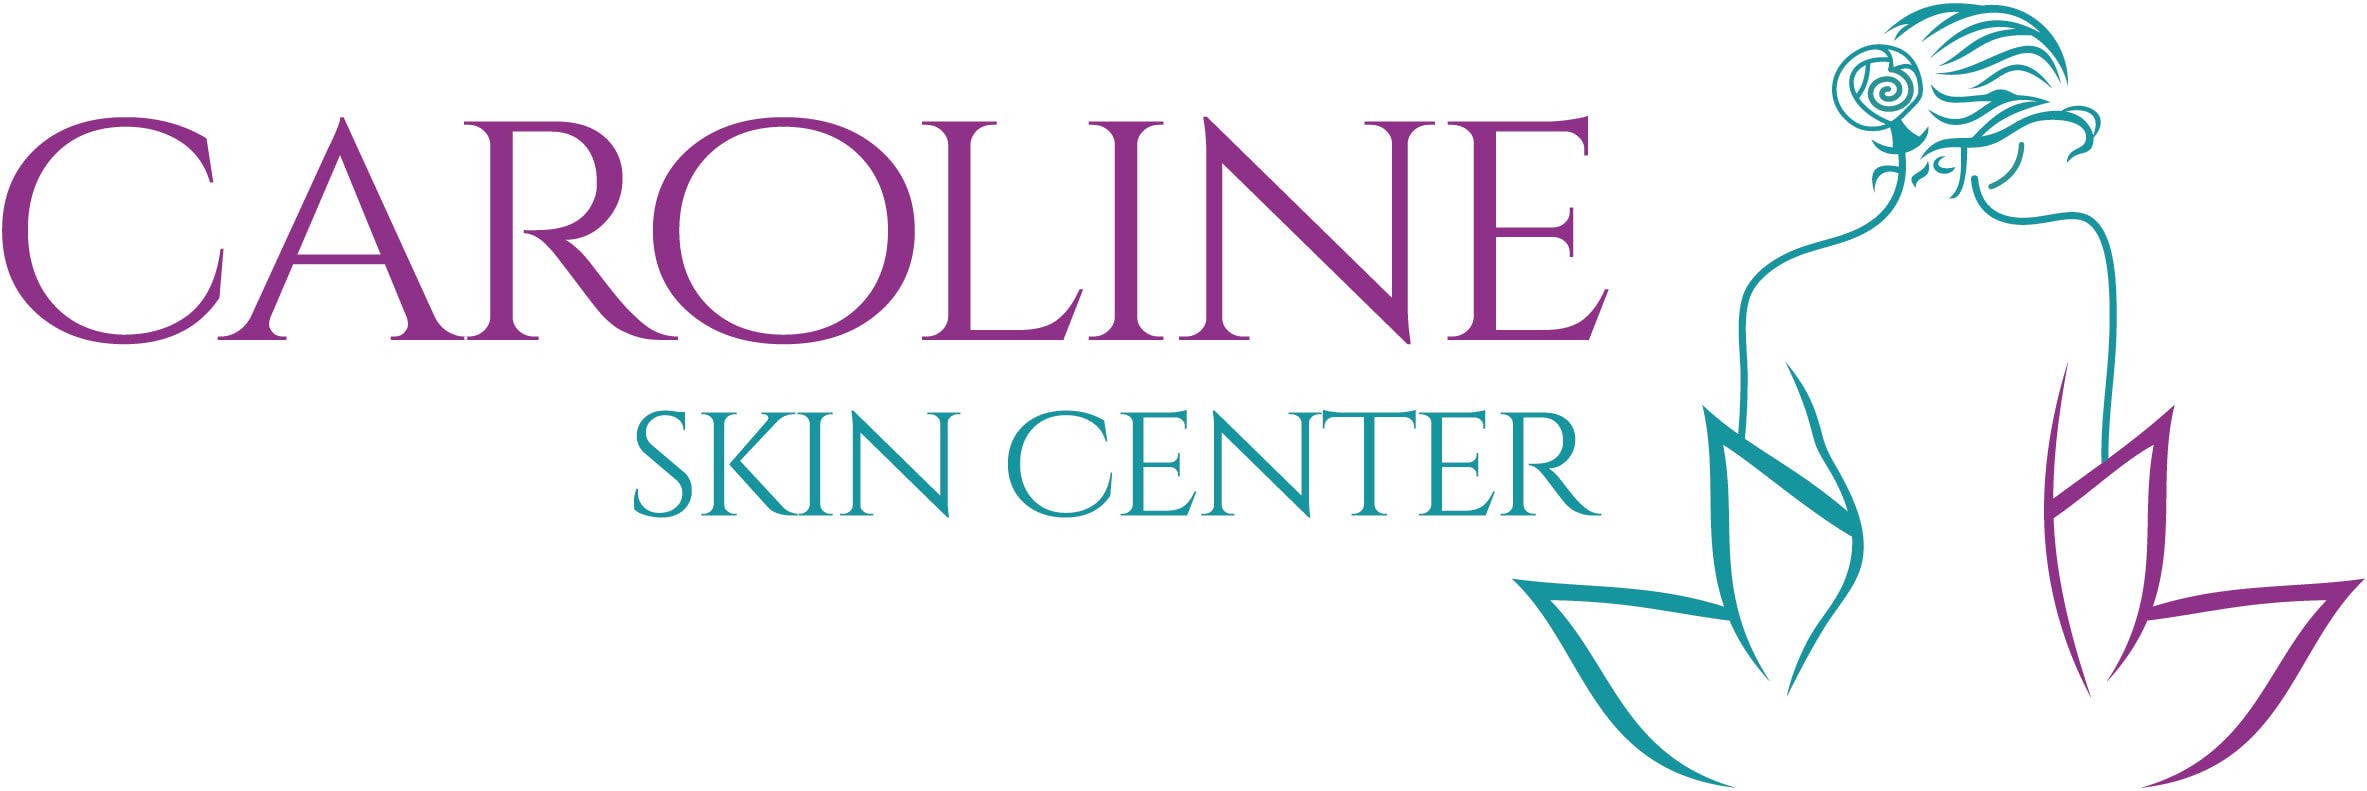 Caroline Skin Center